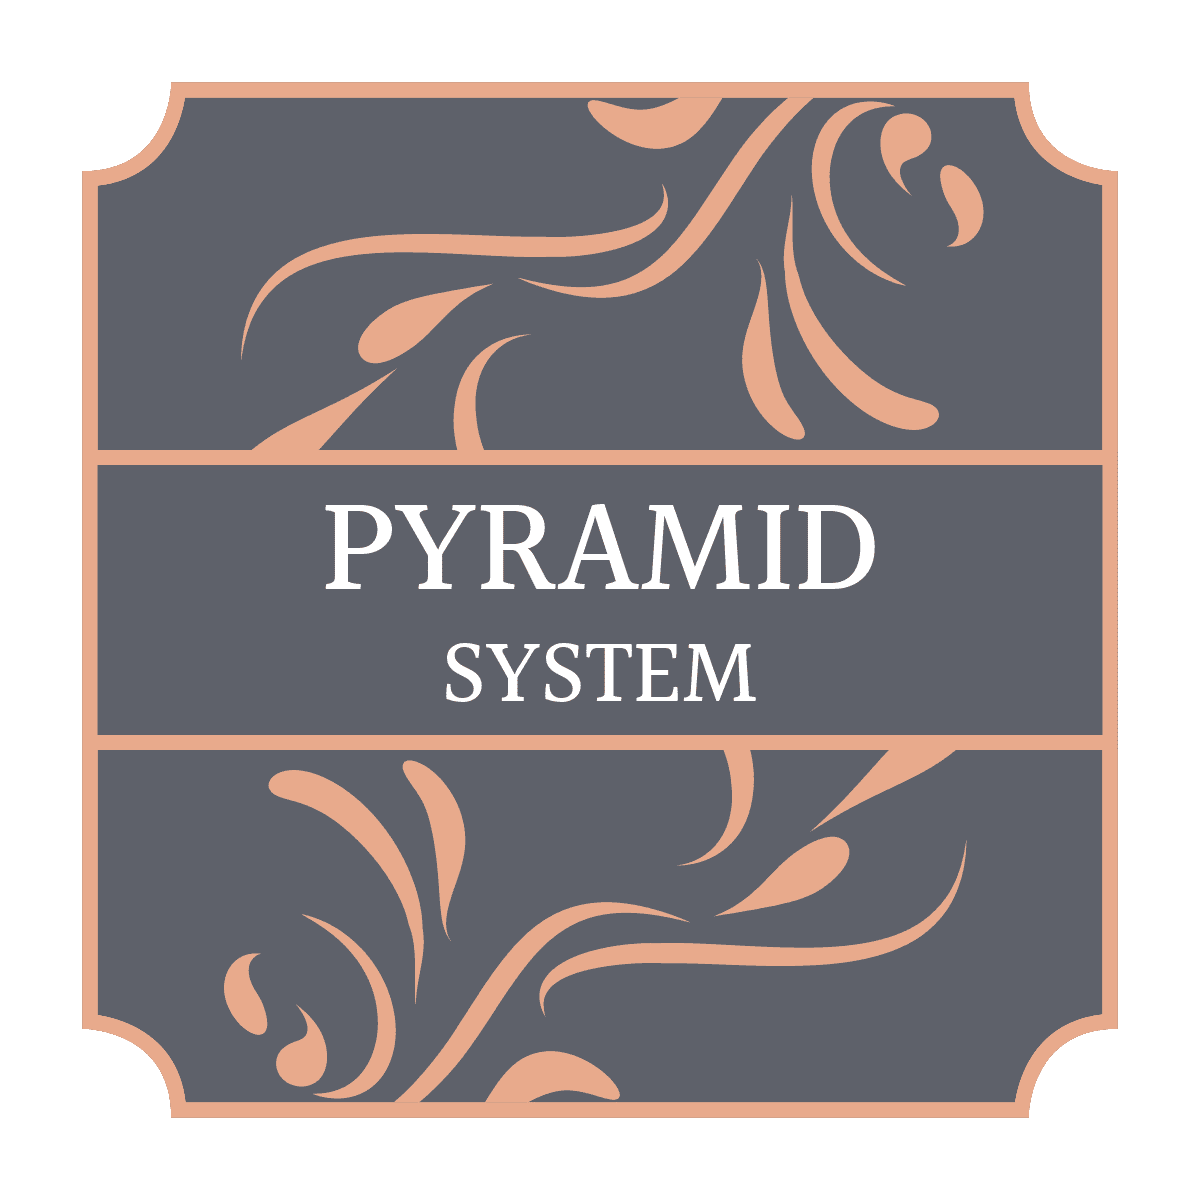 Pyramids Systems